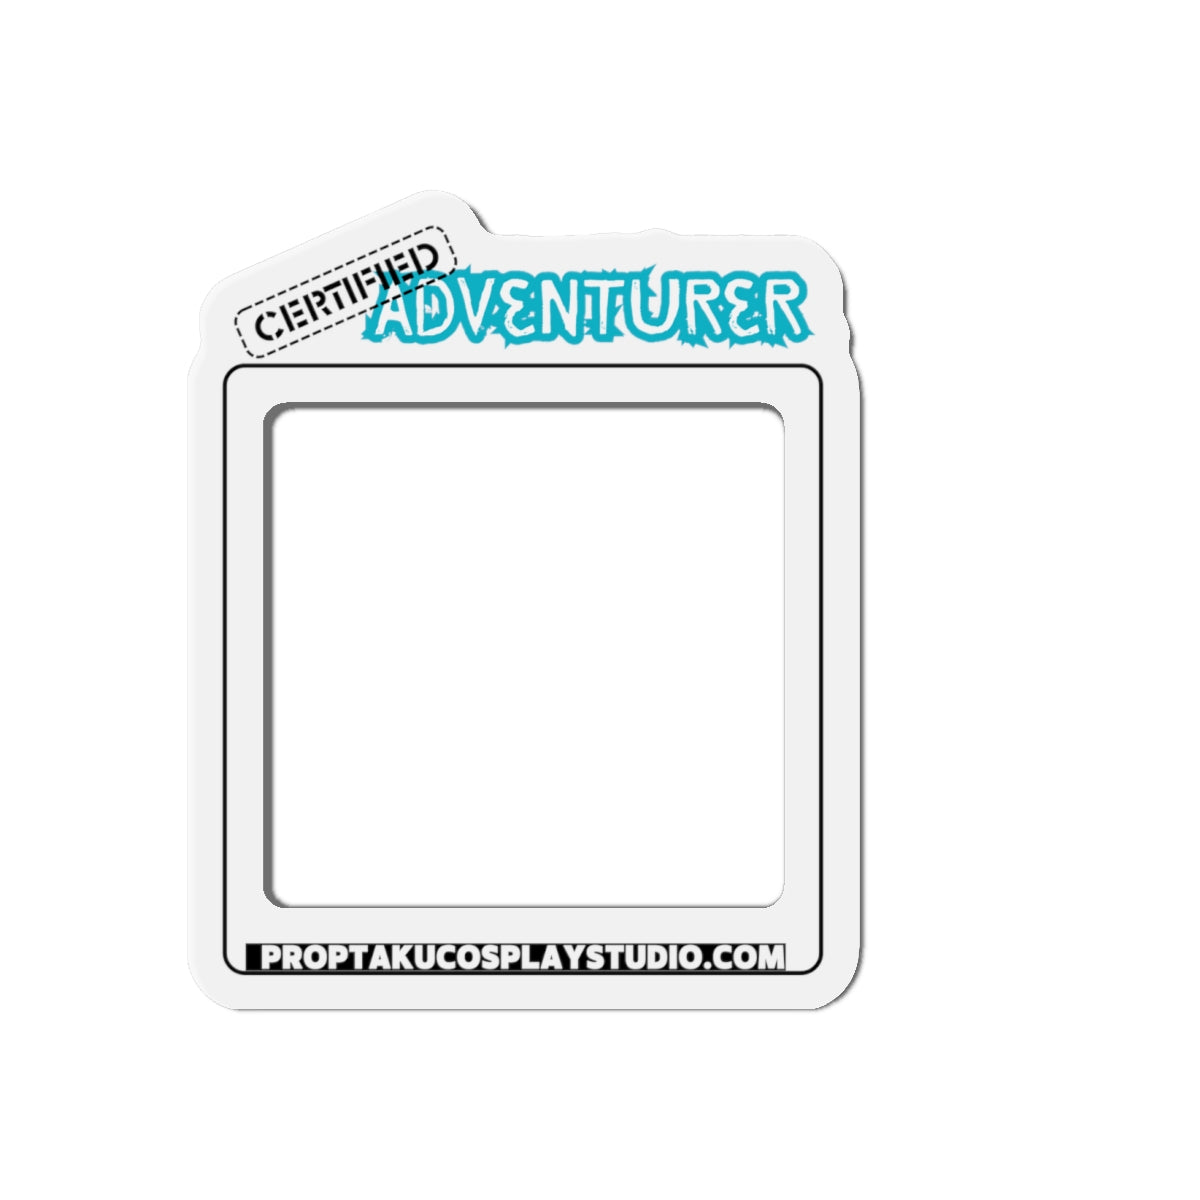 Certified Adventurer Die-Cut Photo Magnet (square)